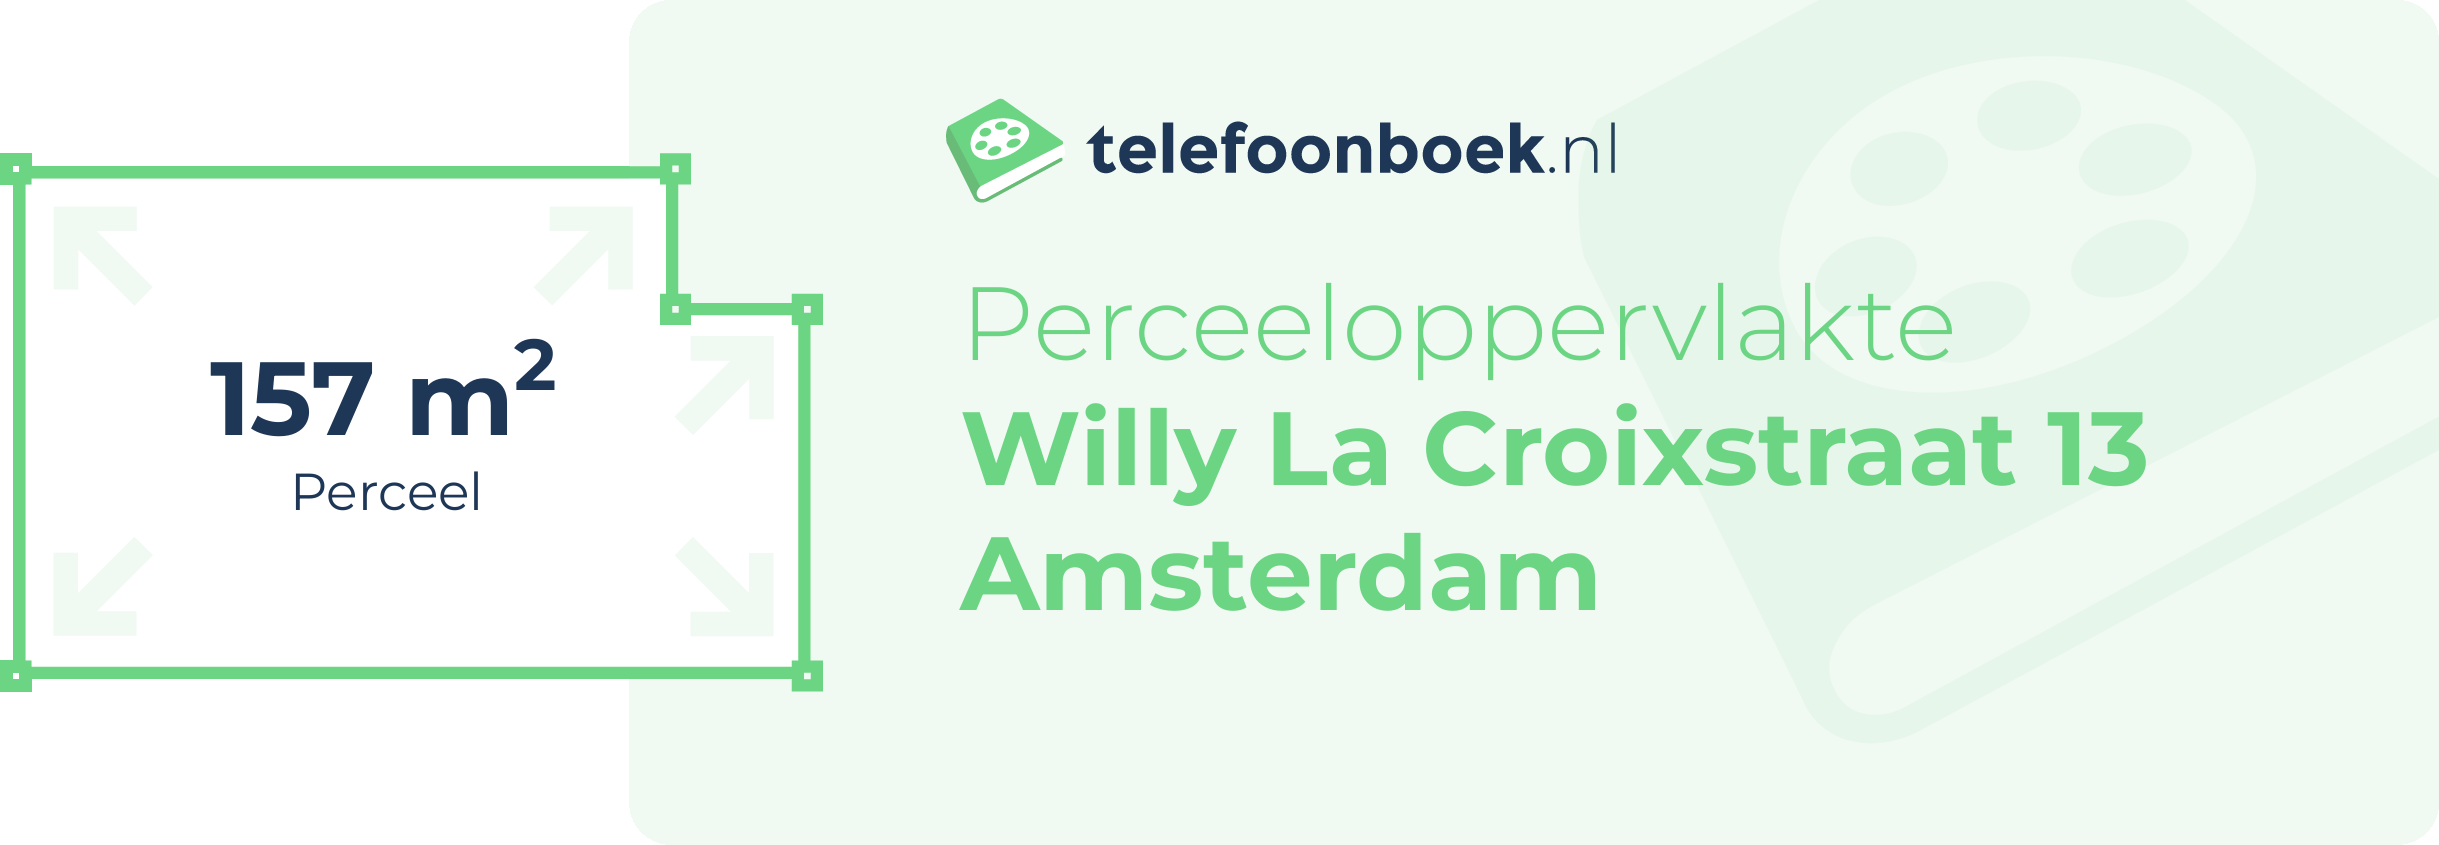 Perceeloppervlakte Willy La Croixstraat 13 Amsterdam